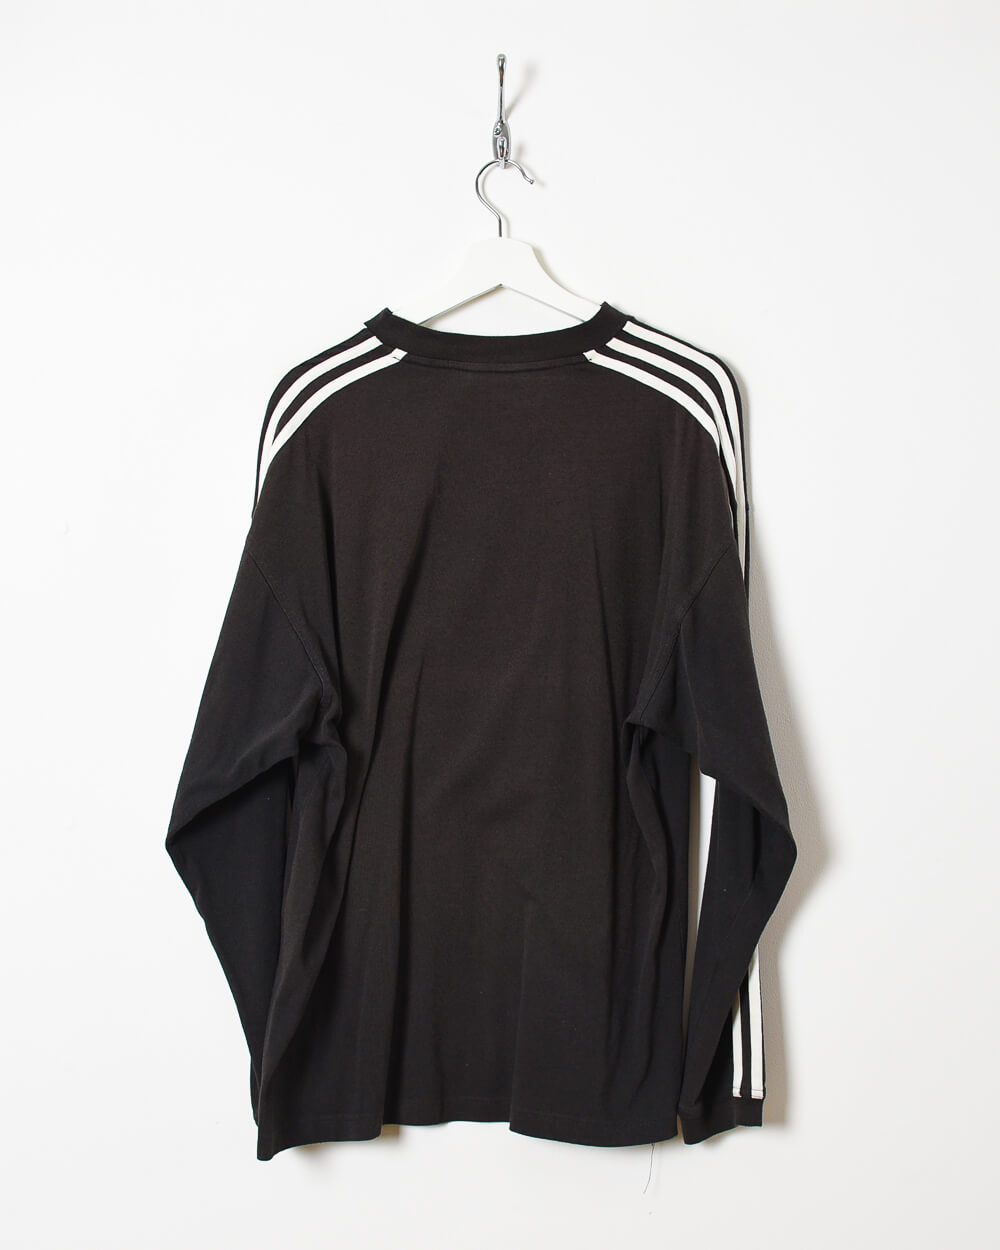 Black Adidas Long Sleeved T-Shirt -  Large